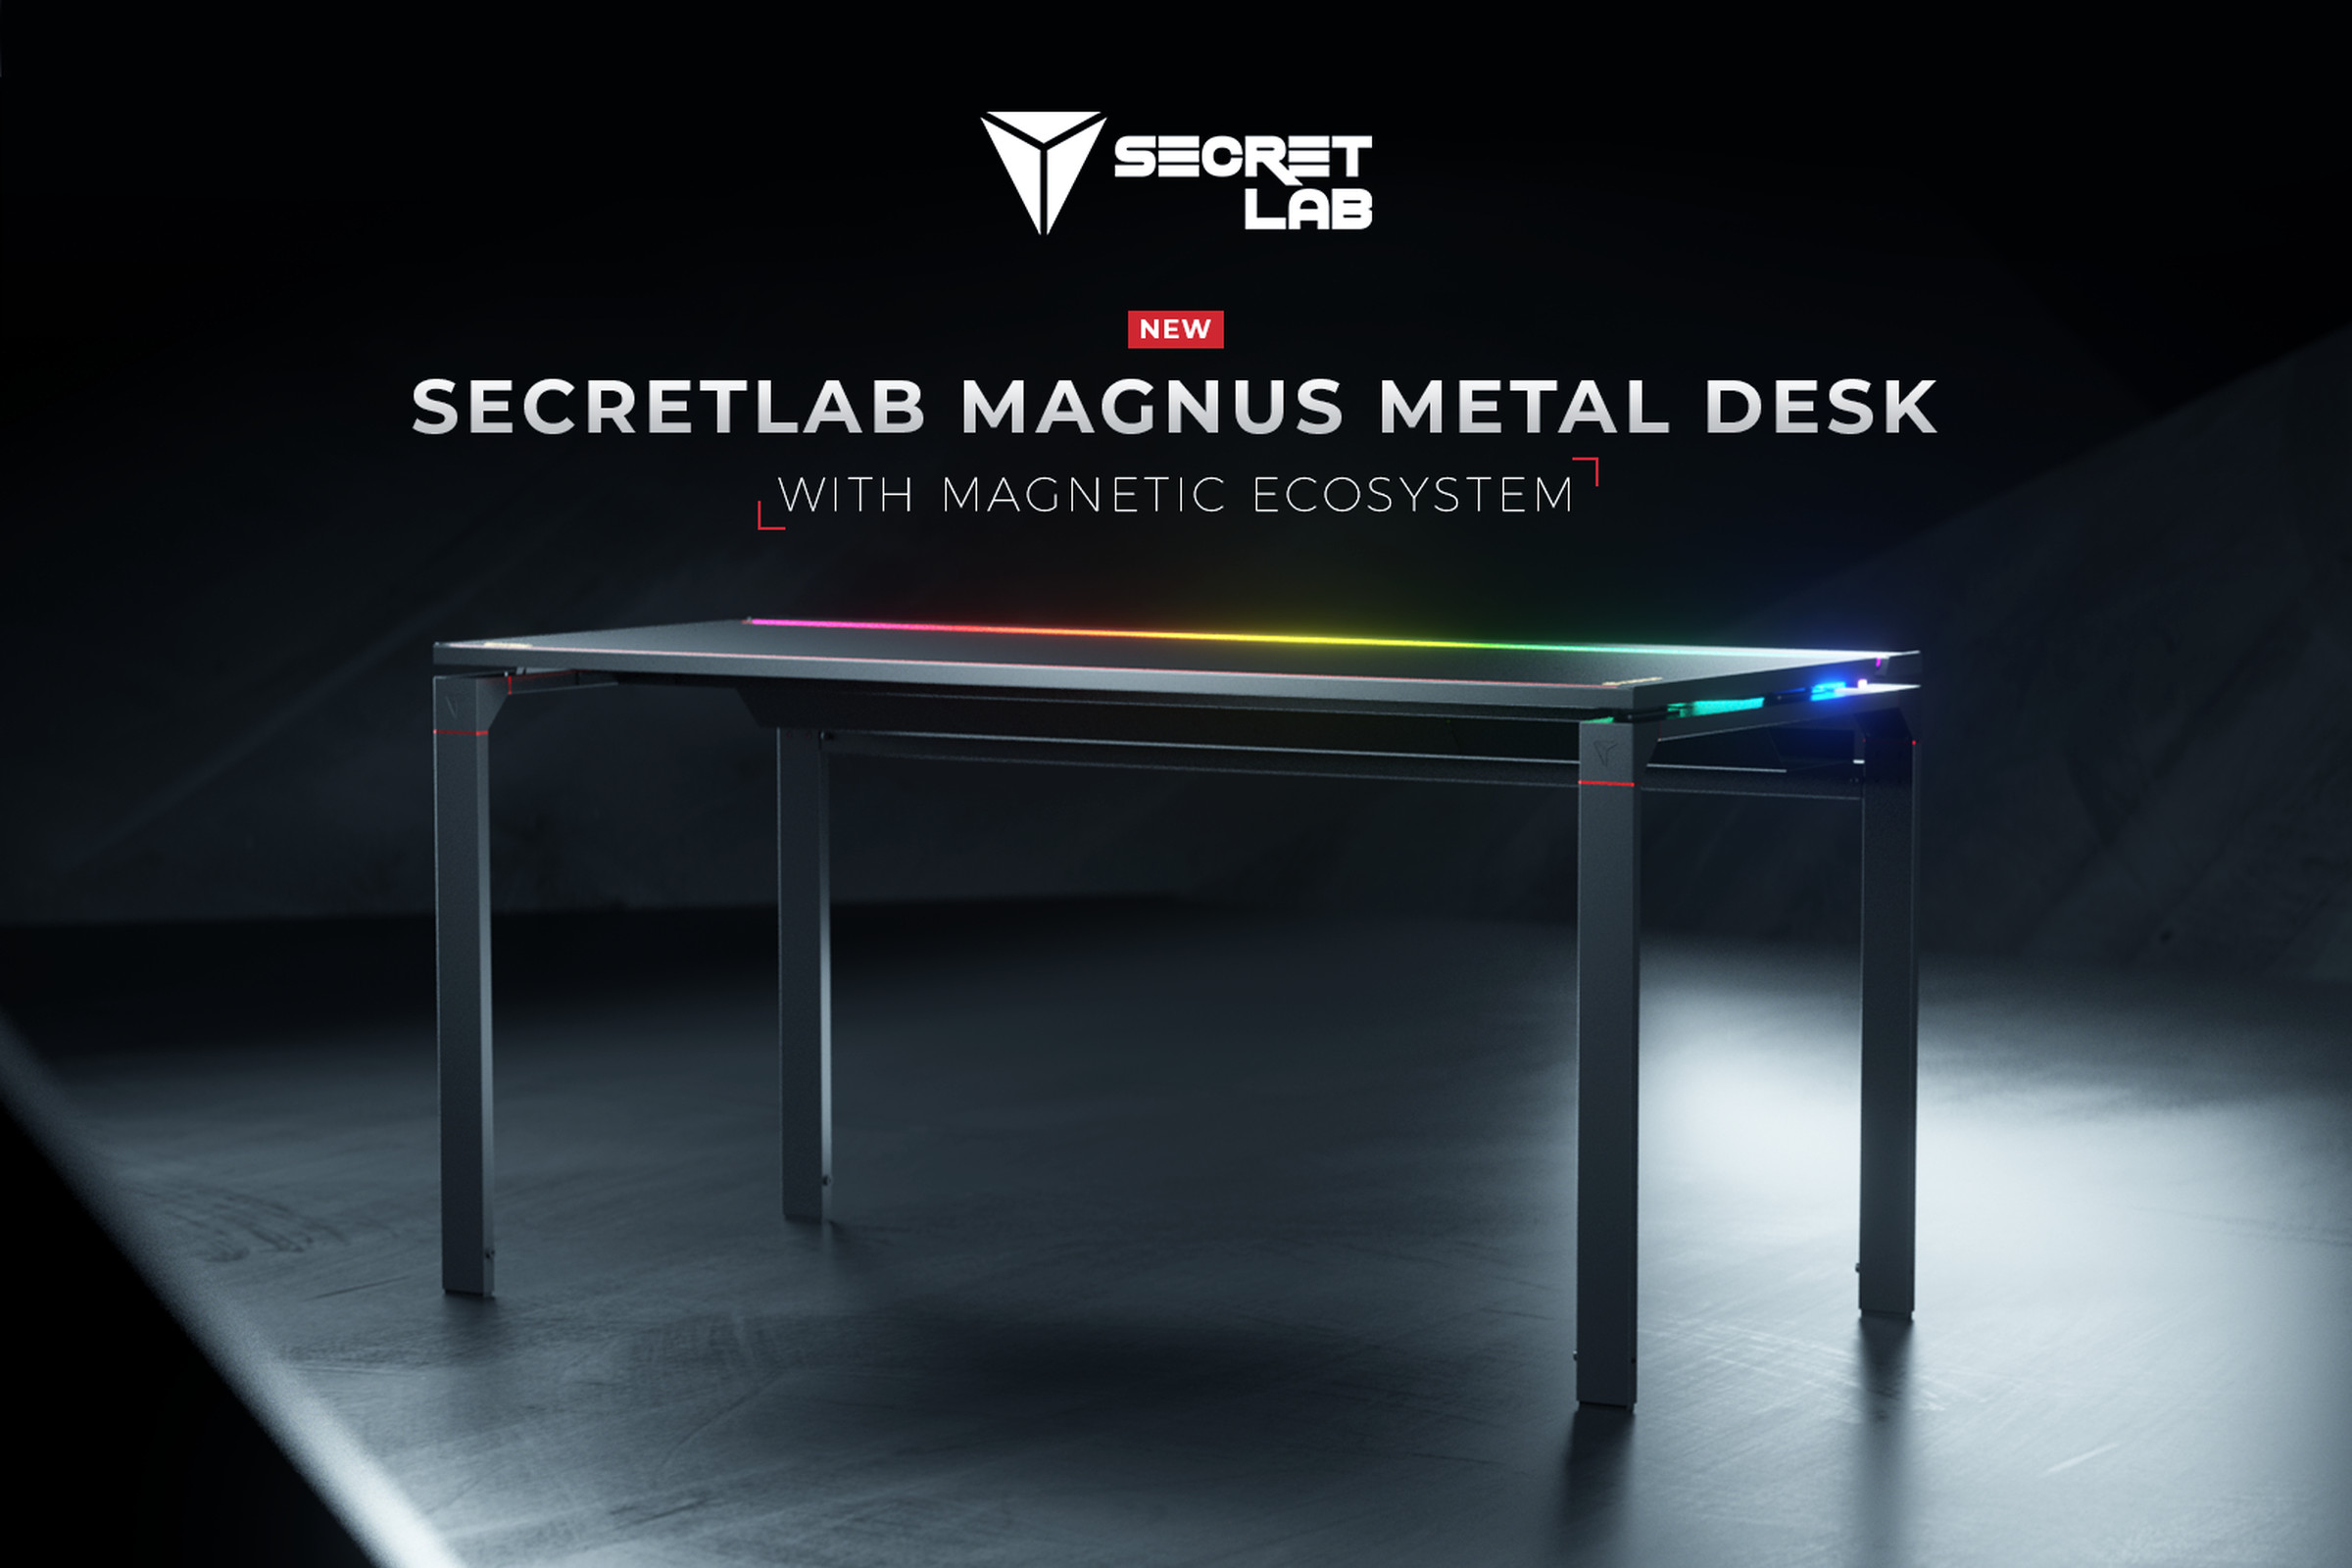 Secretlab’s Magnus Metal Desk.